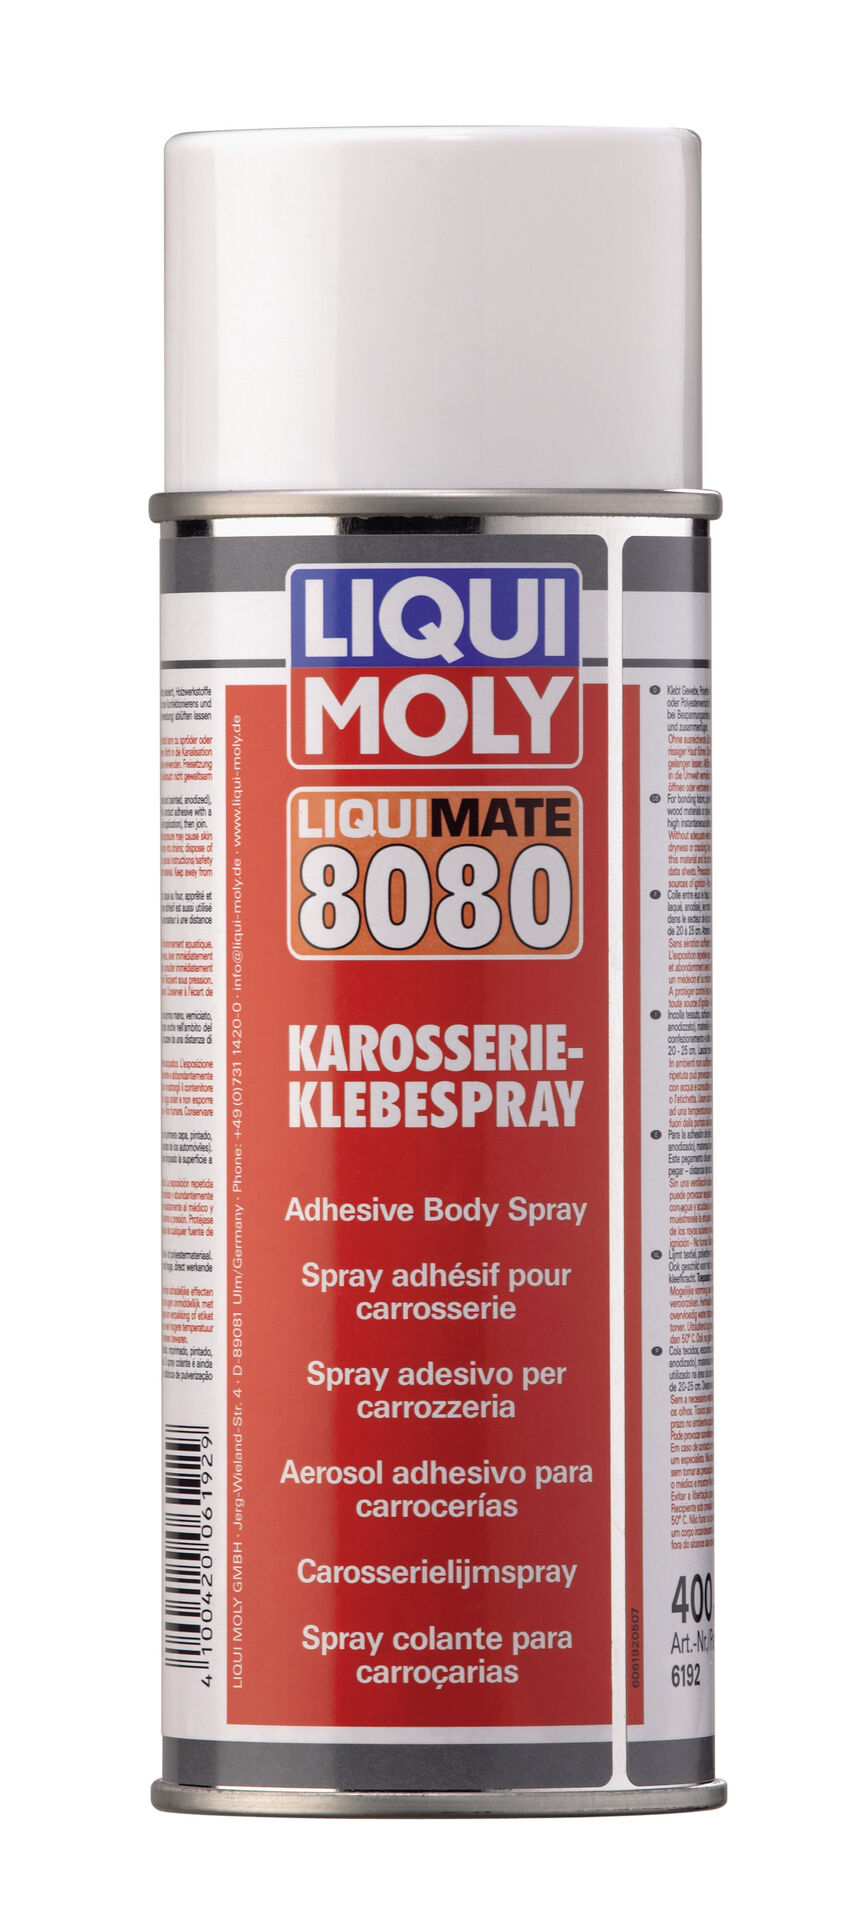 Liqui Moly Liquimate 8080 Karosserie Klebespray Klebemittel 400 ml